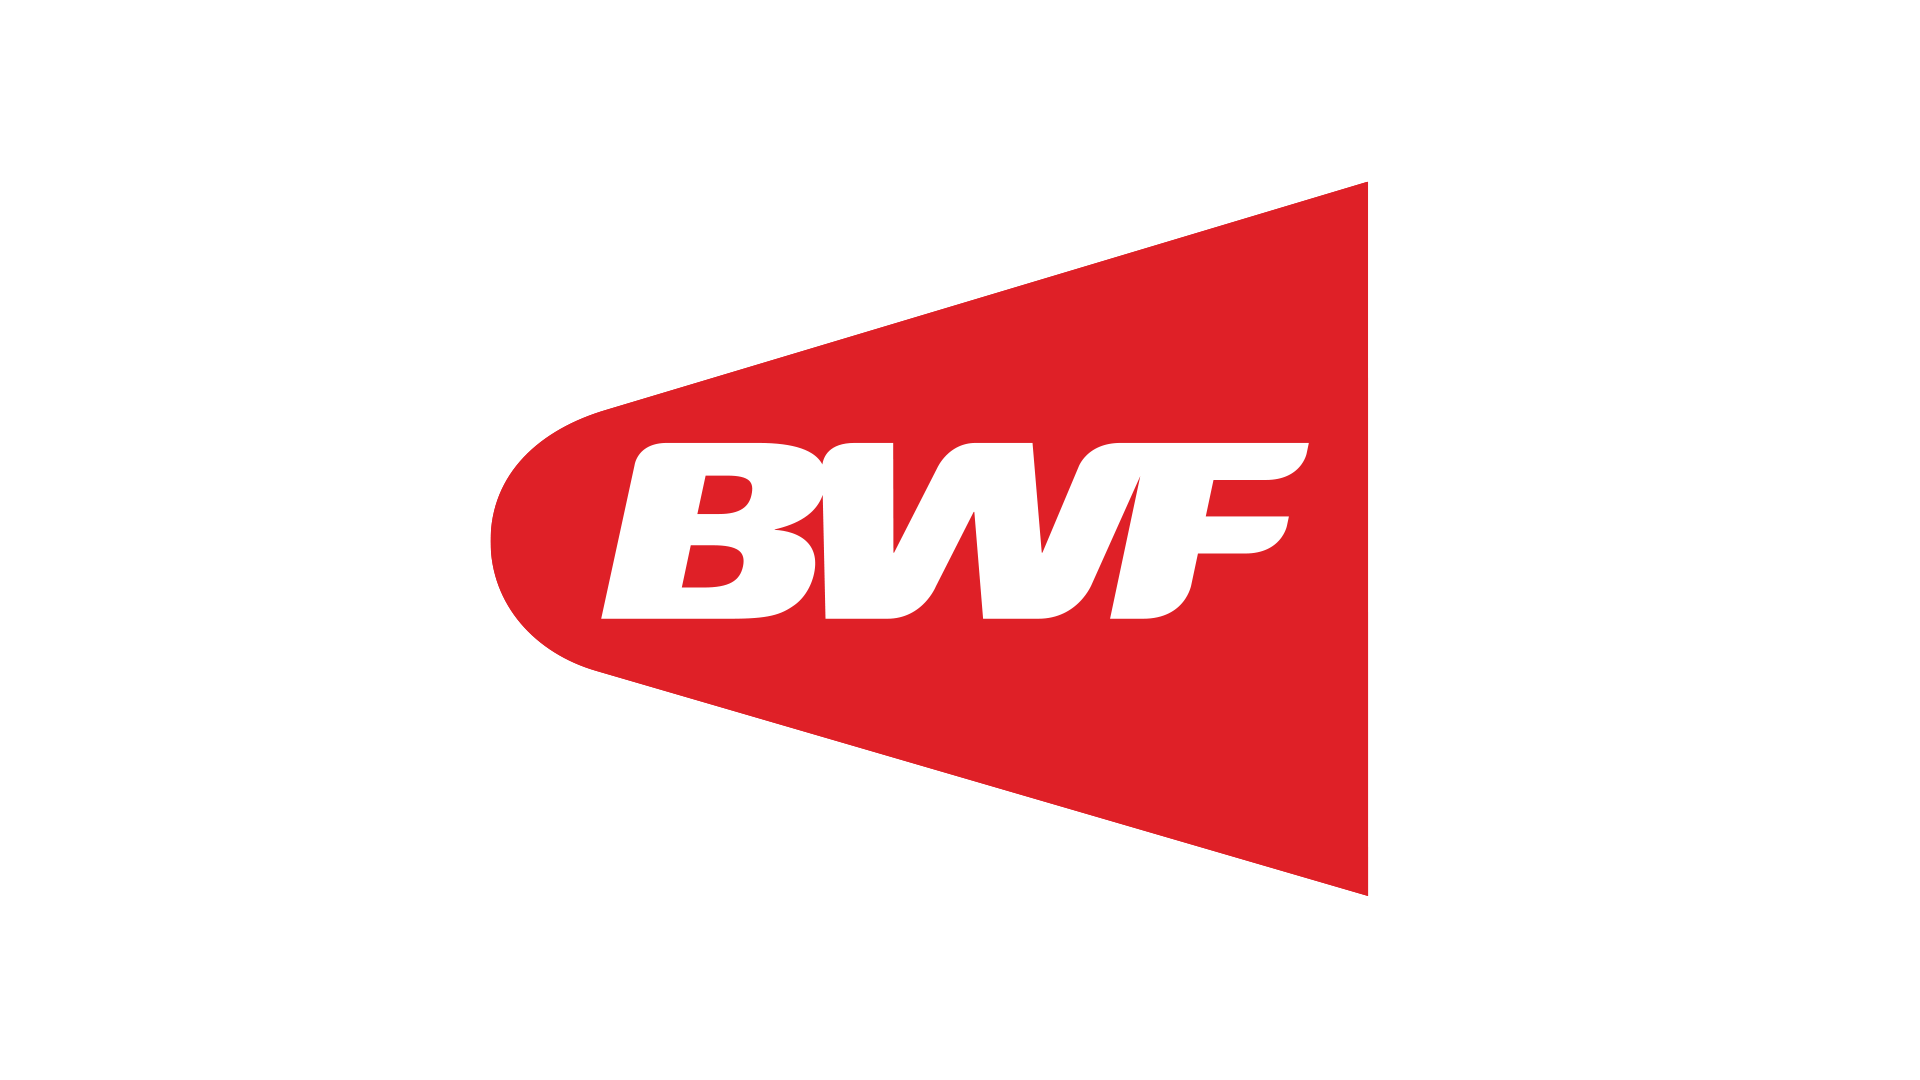 Asian leg of HSBC BWF World Tour moved to January 2021 – Badminton Oceania